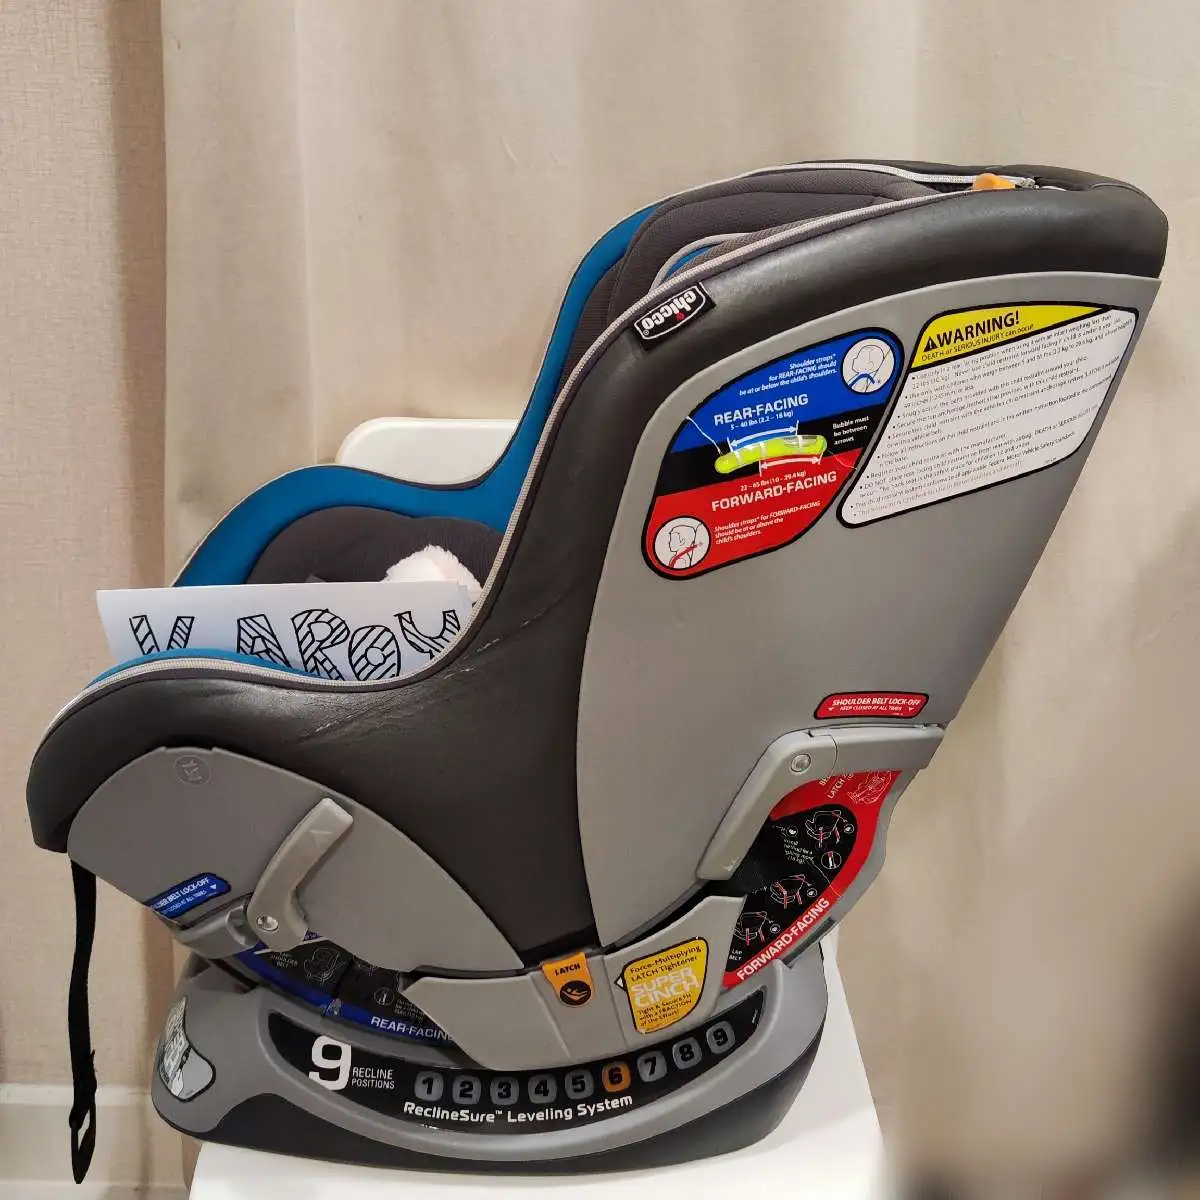 Chicco คาร์ซีท Nextfit Zip Air Car Seat